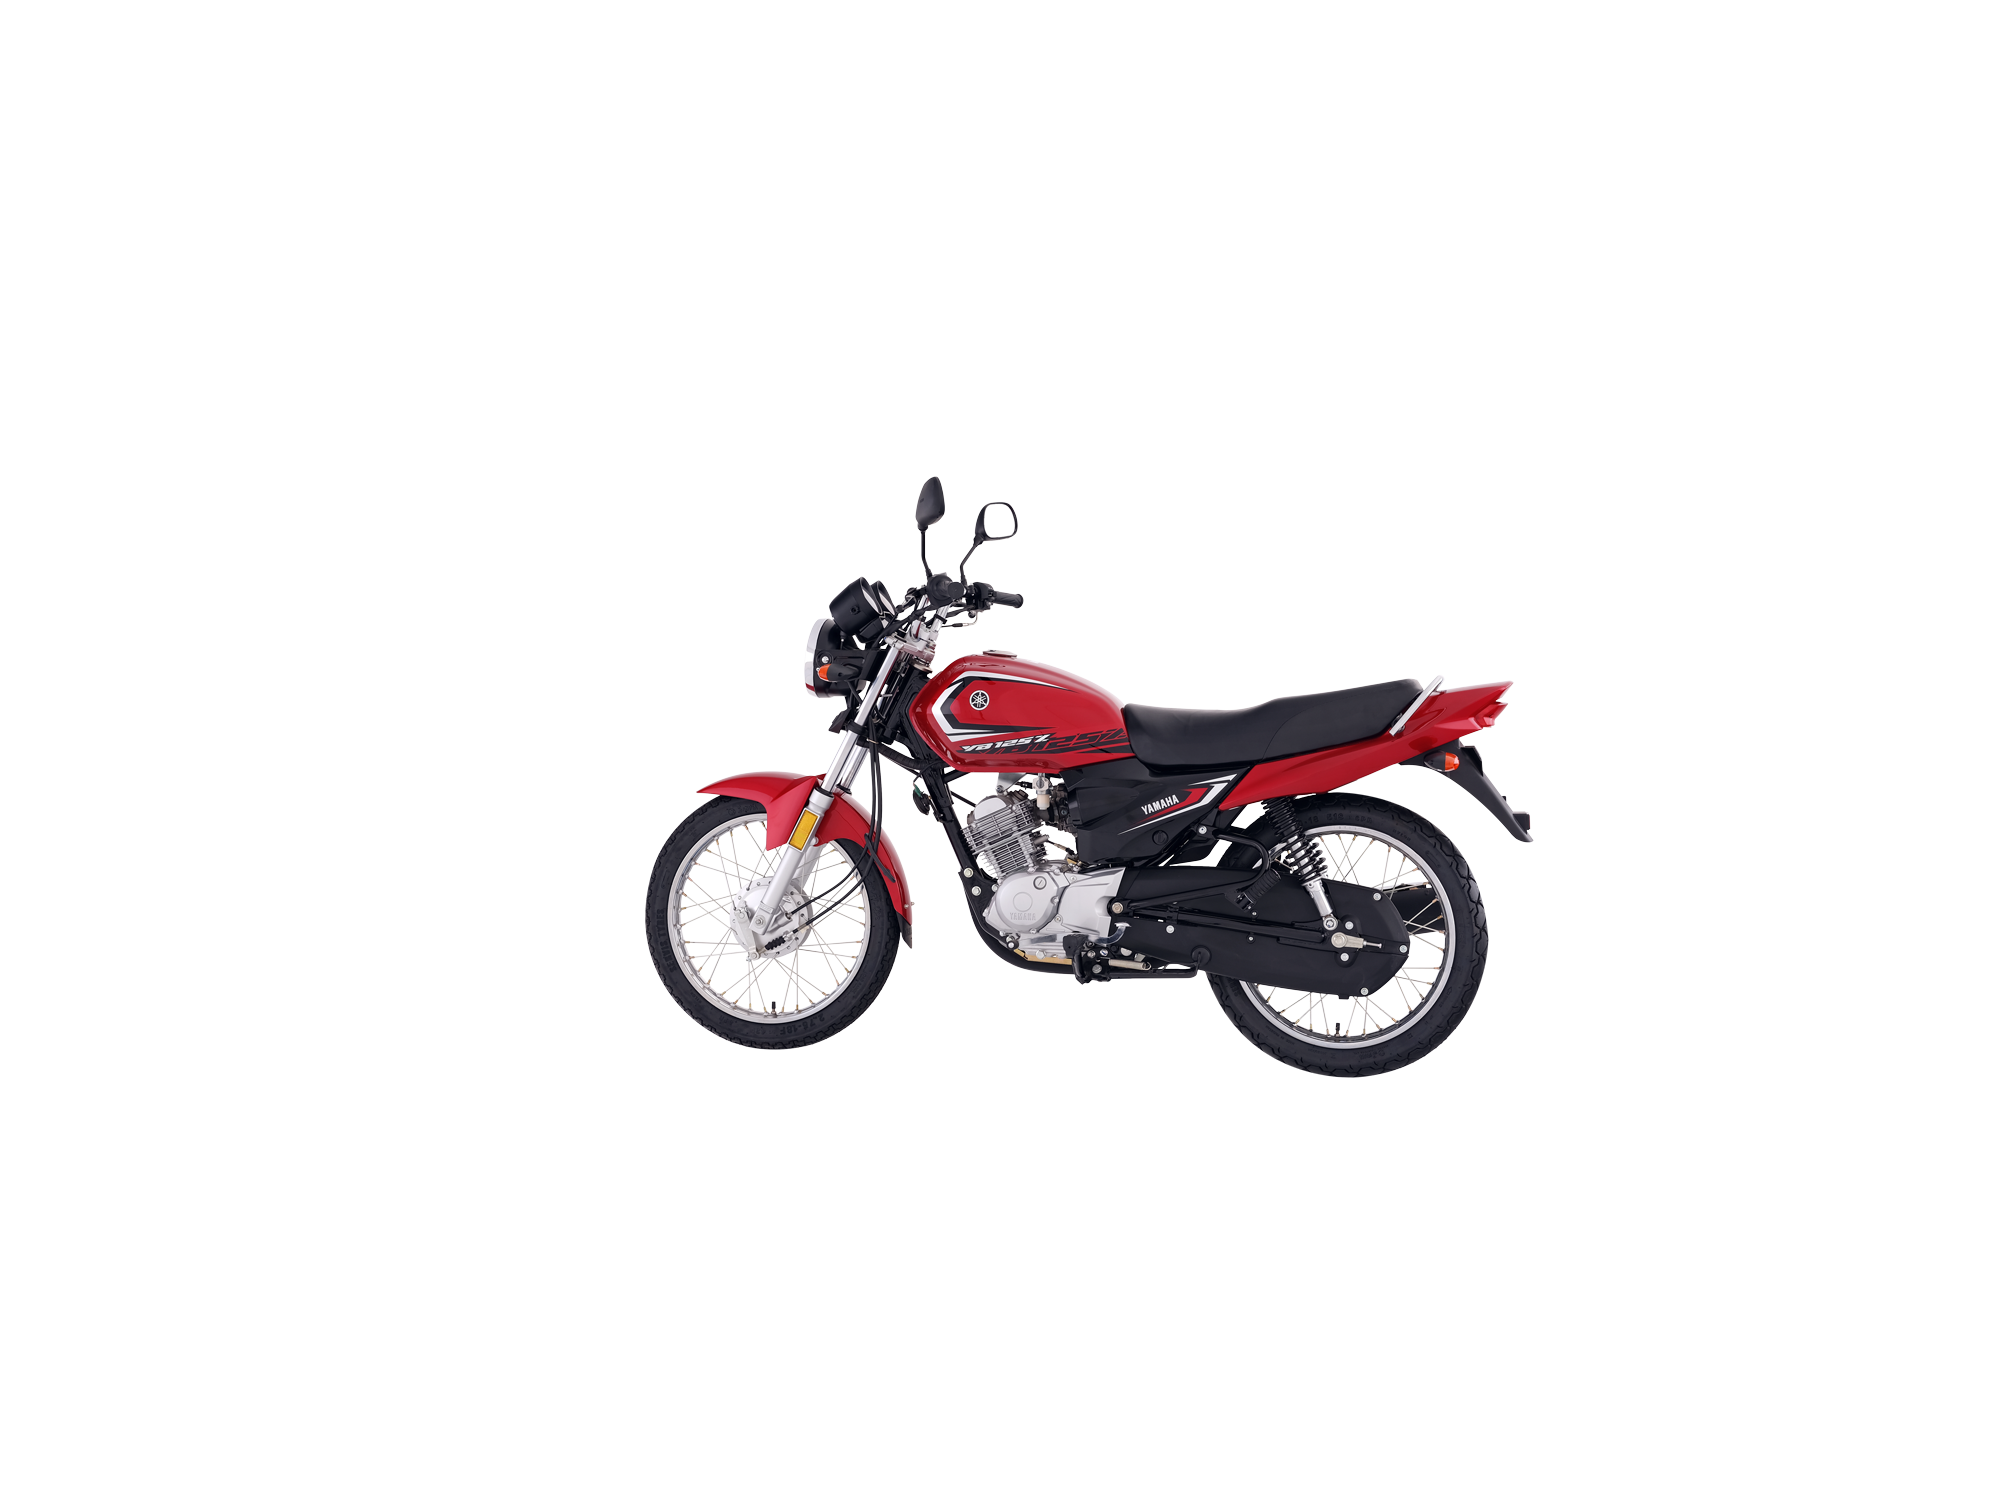 Yamaha Yb 100 Price In Pakistan 2020